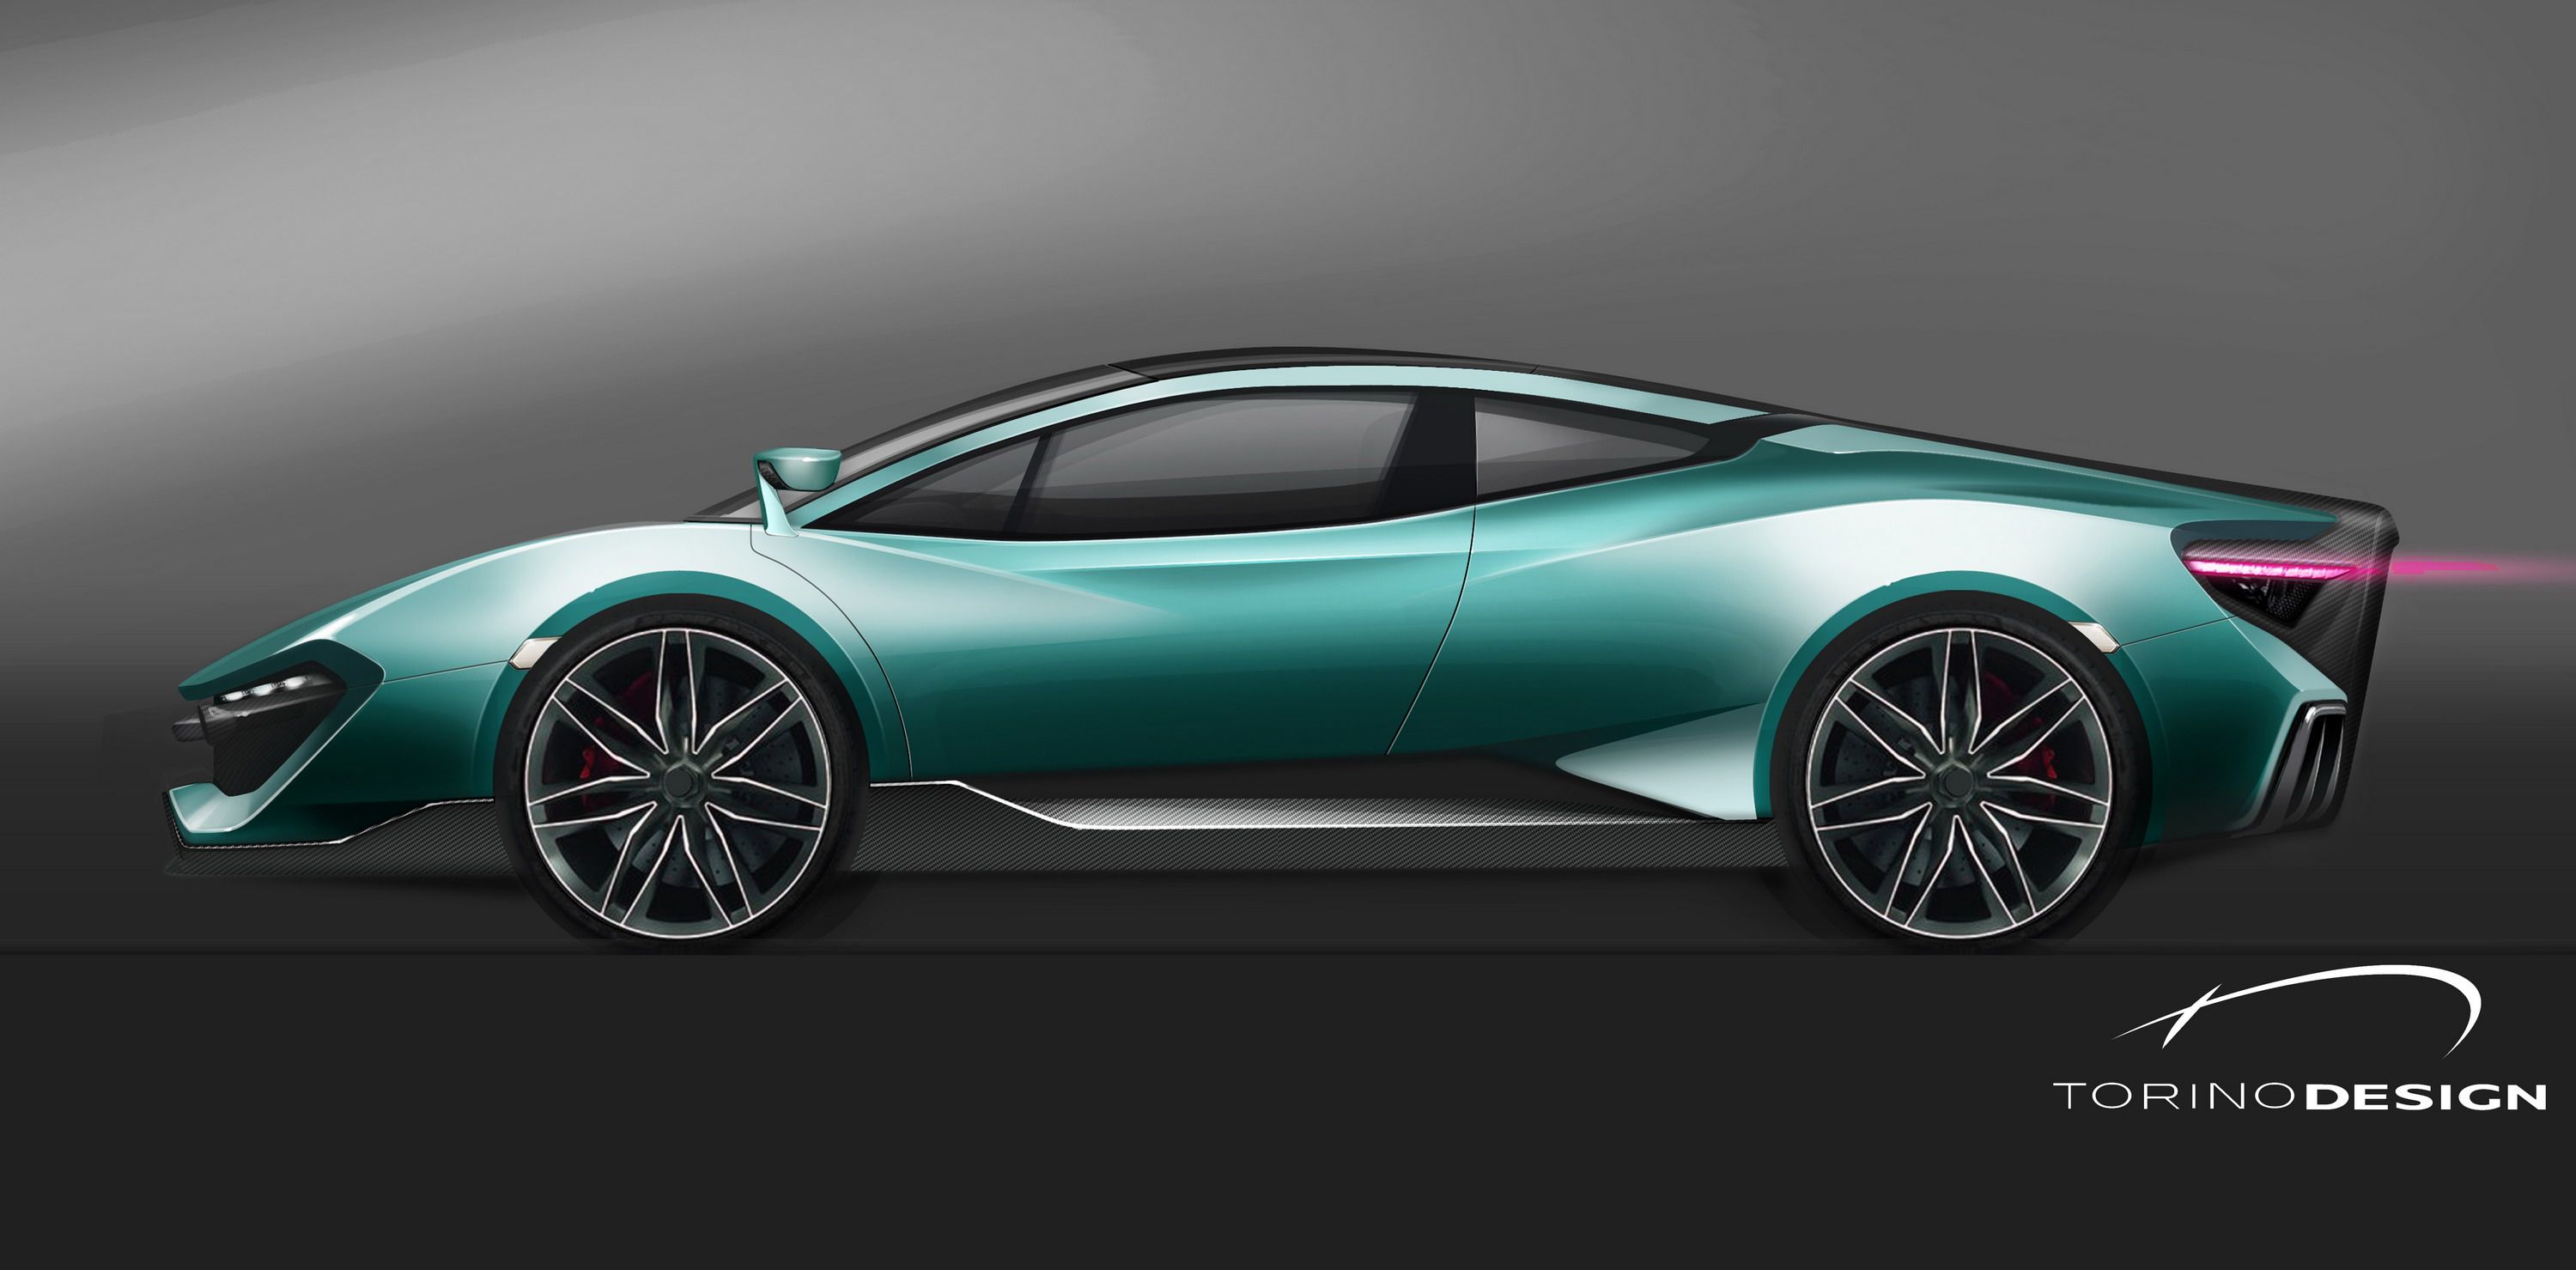 2015 Torino Design ATS Wild Twelve Concept